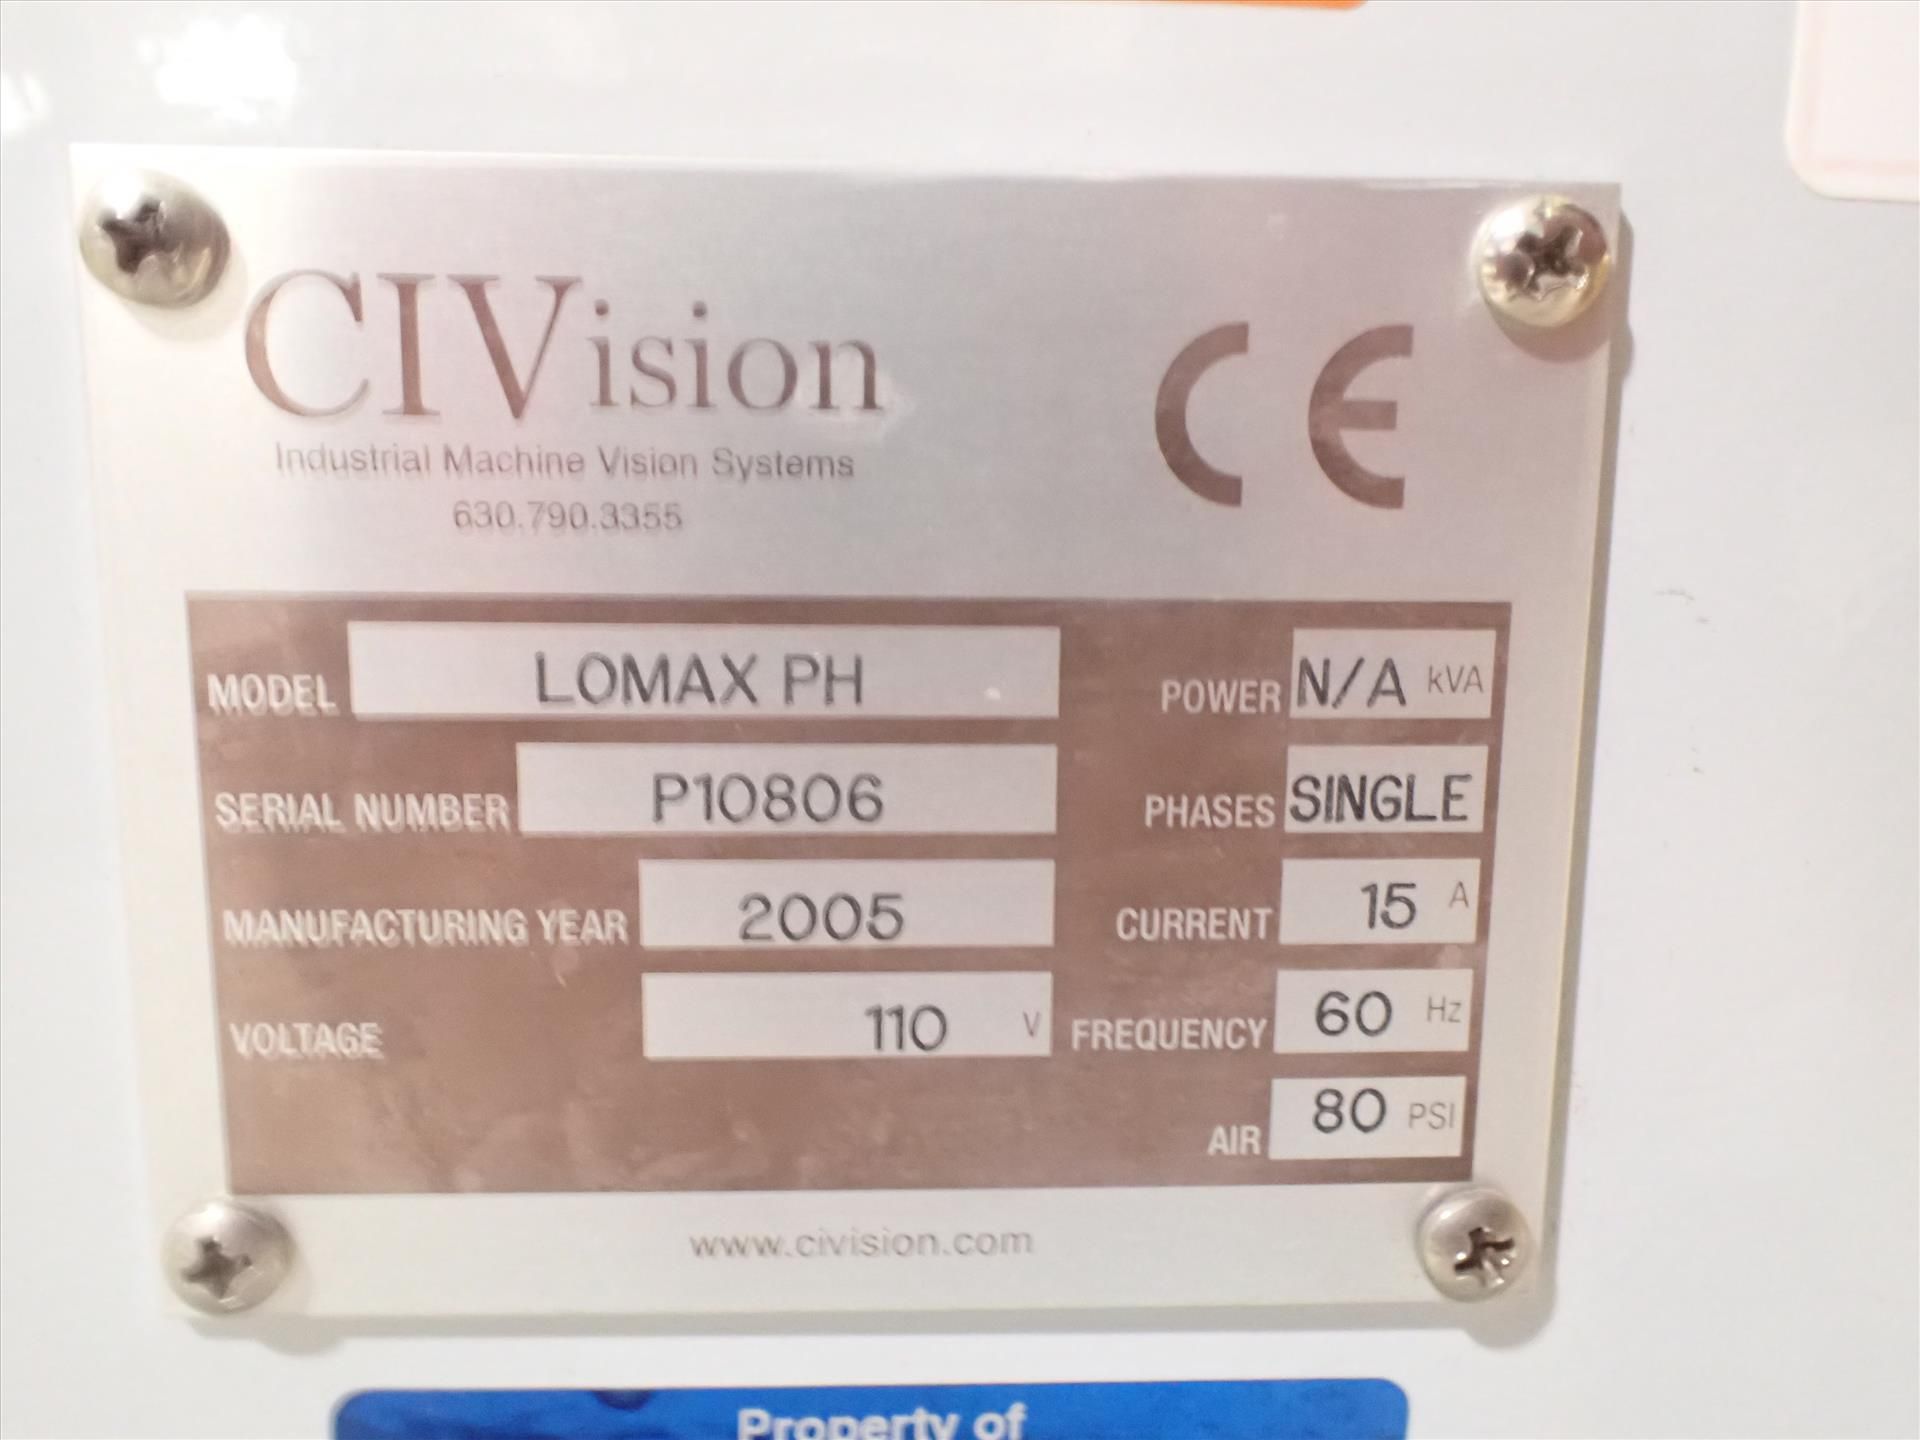 Civision mod. Lomax PH visual inspection system, ser. no. P10806 - Image 5 of 5